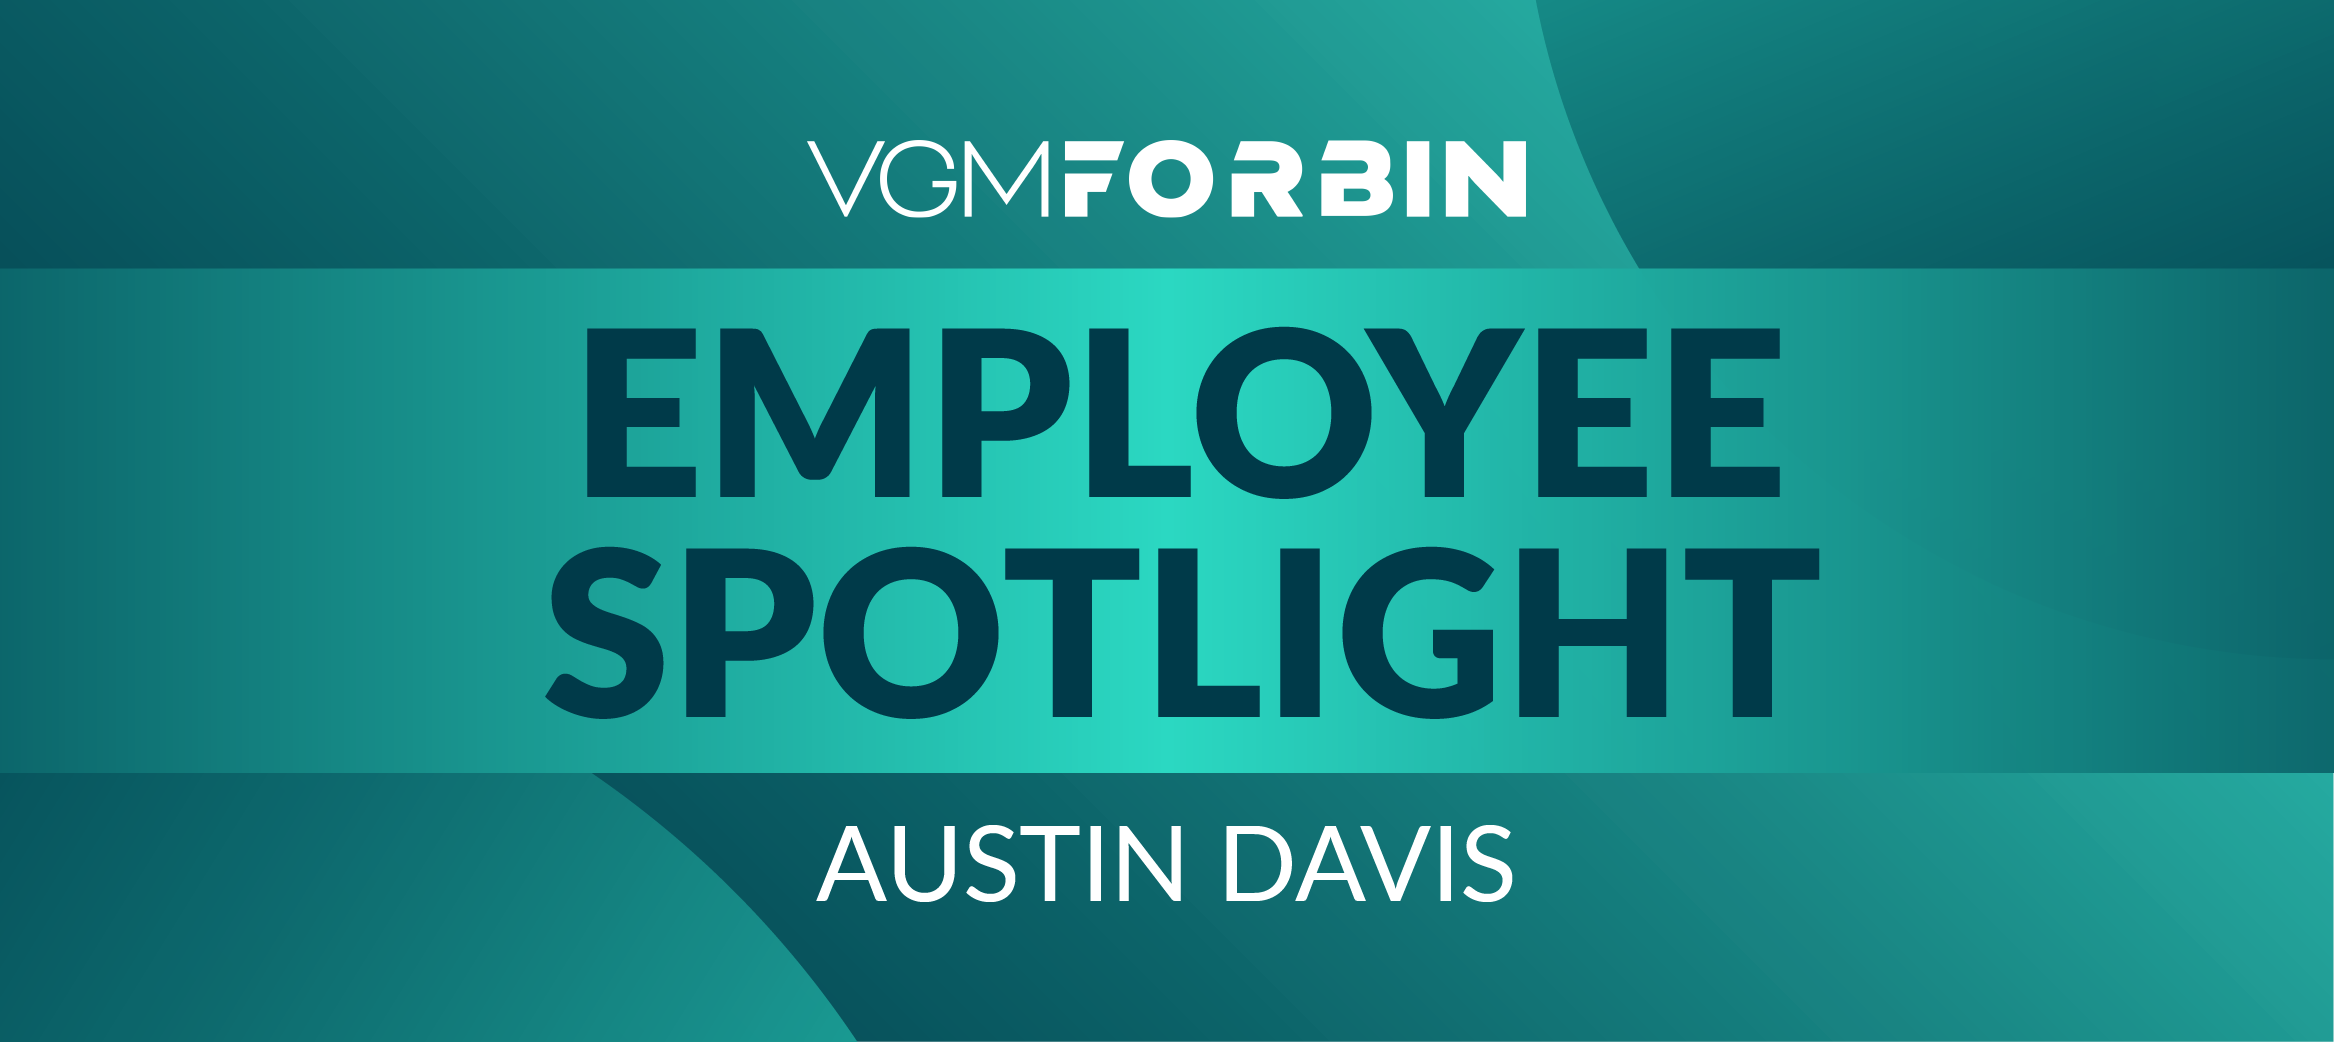 Celebrating Austin Davis: Spotlighting Excellence in Technical Support at VGM Forbin